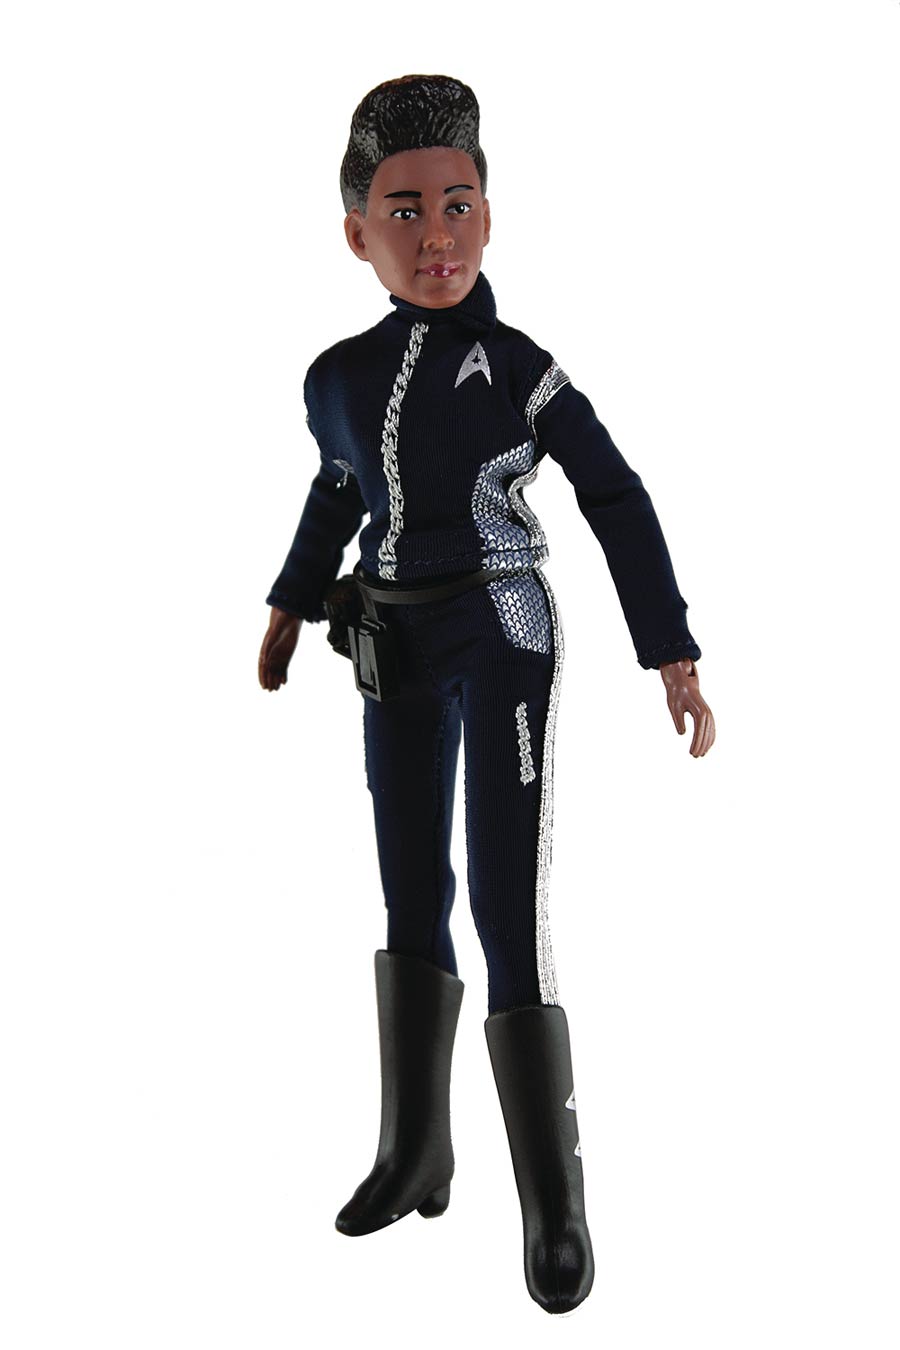 Mego Star Trek Discovery 8-Inch Action Figure - Michael Burnham